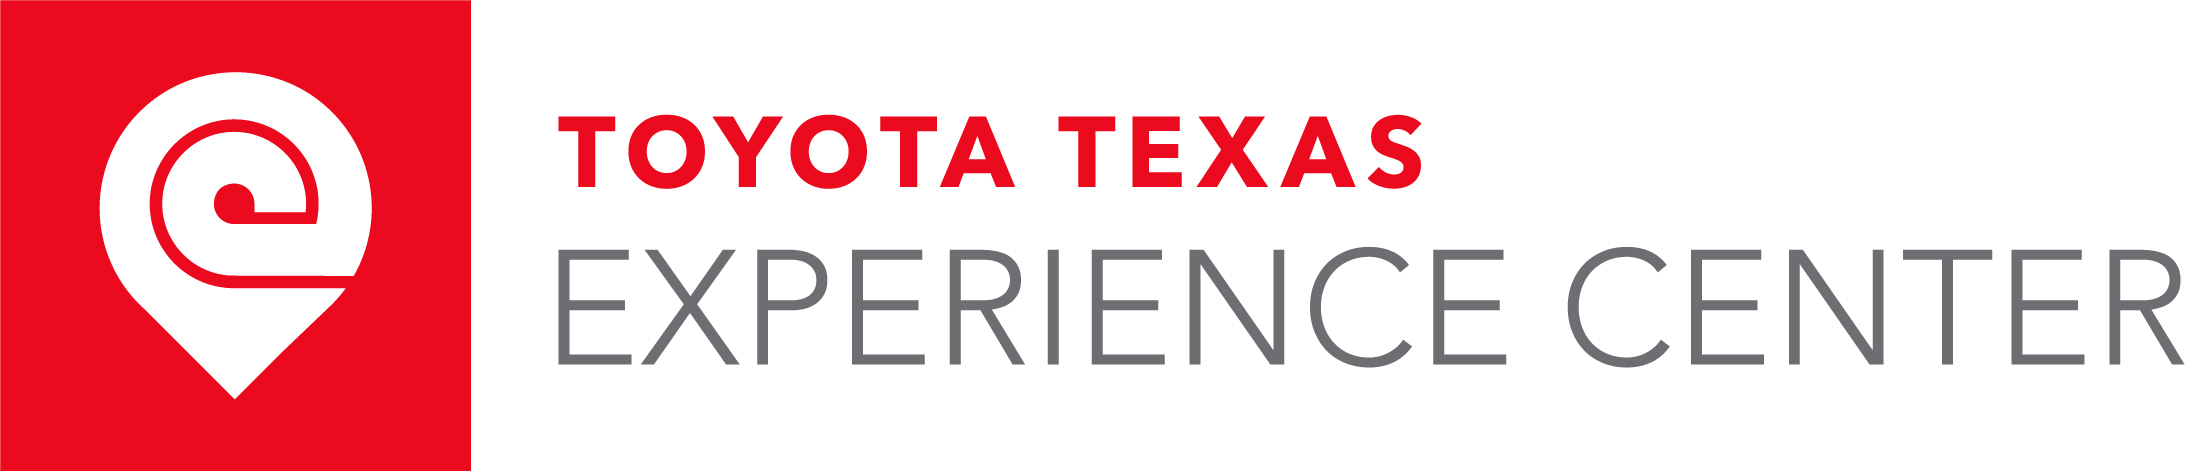 Toyota Texas Experience Center logo